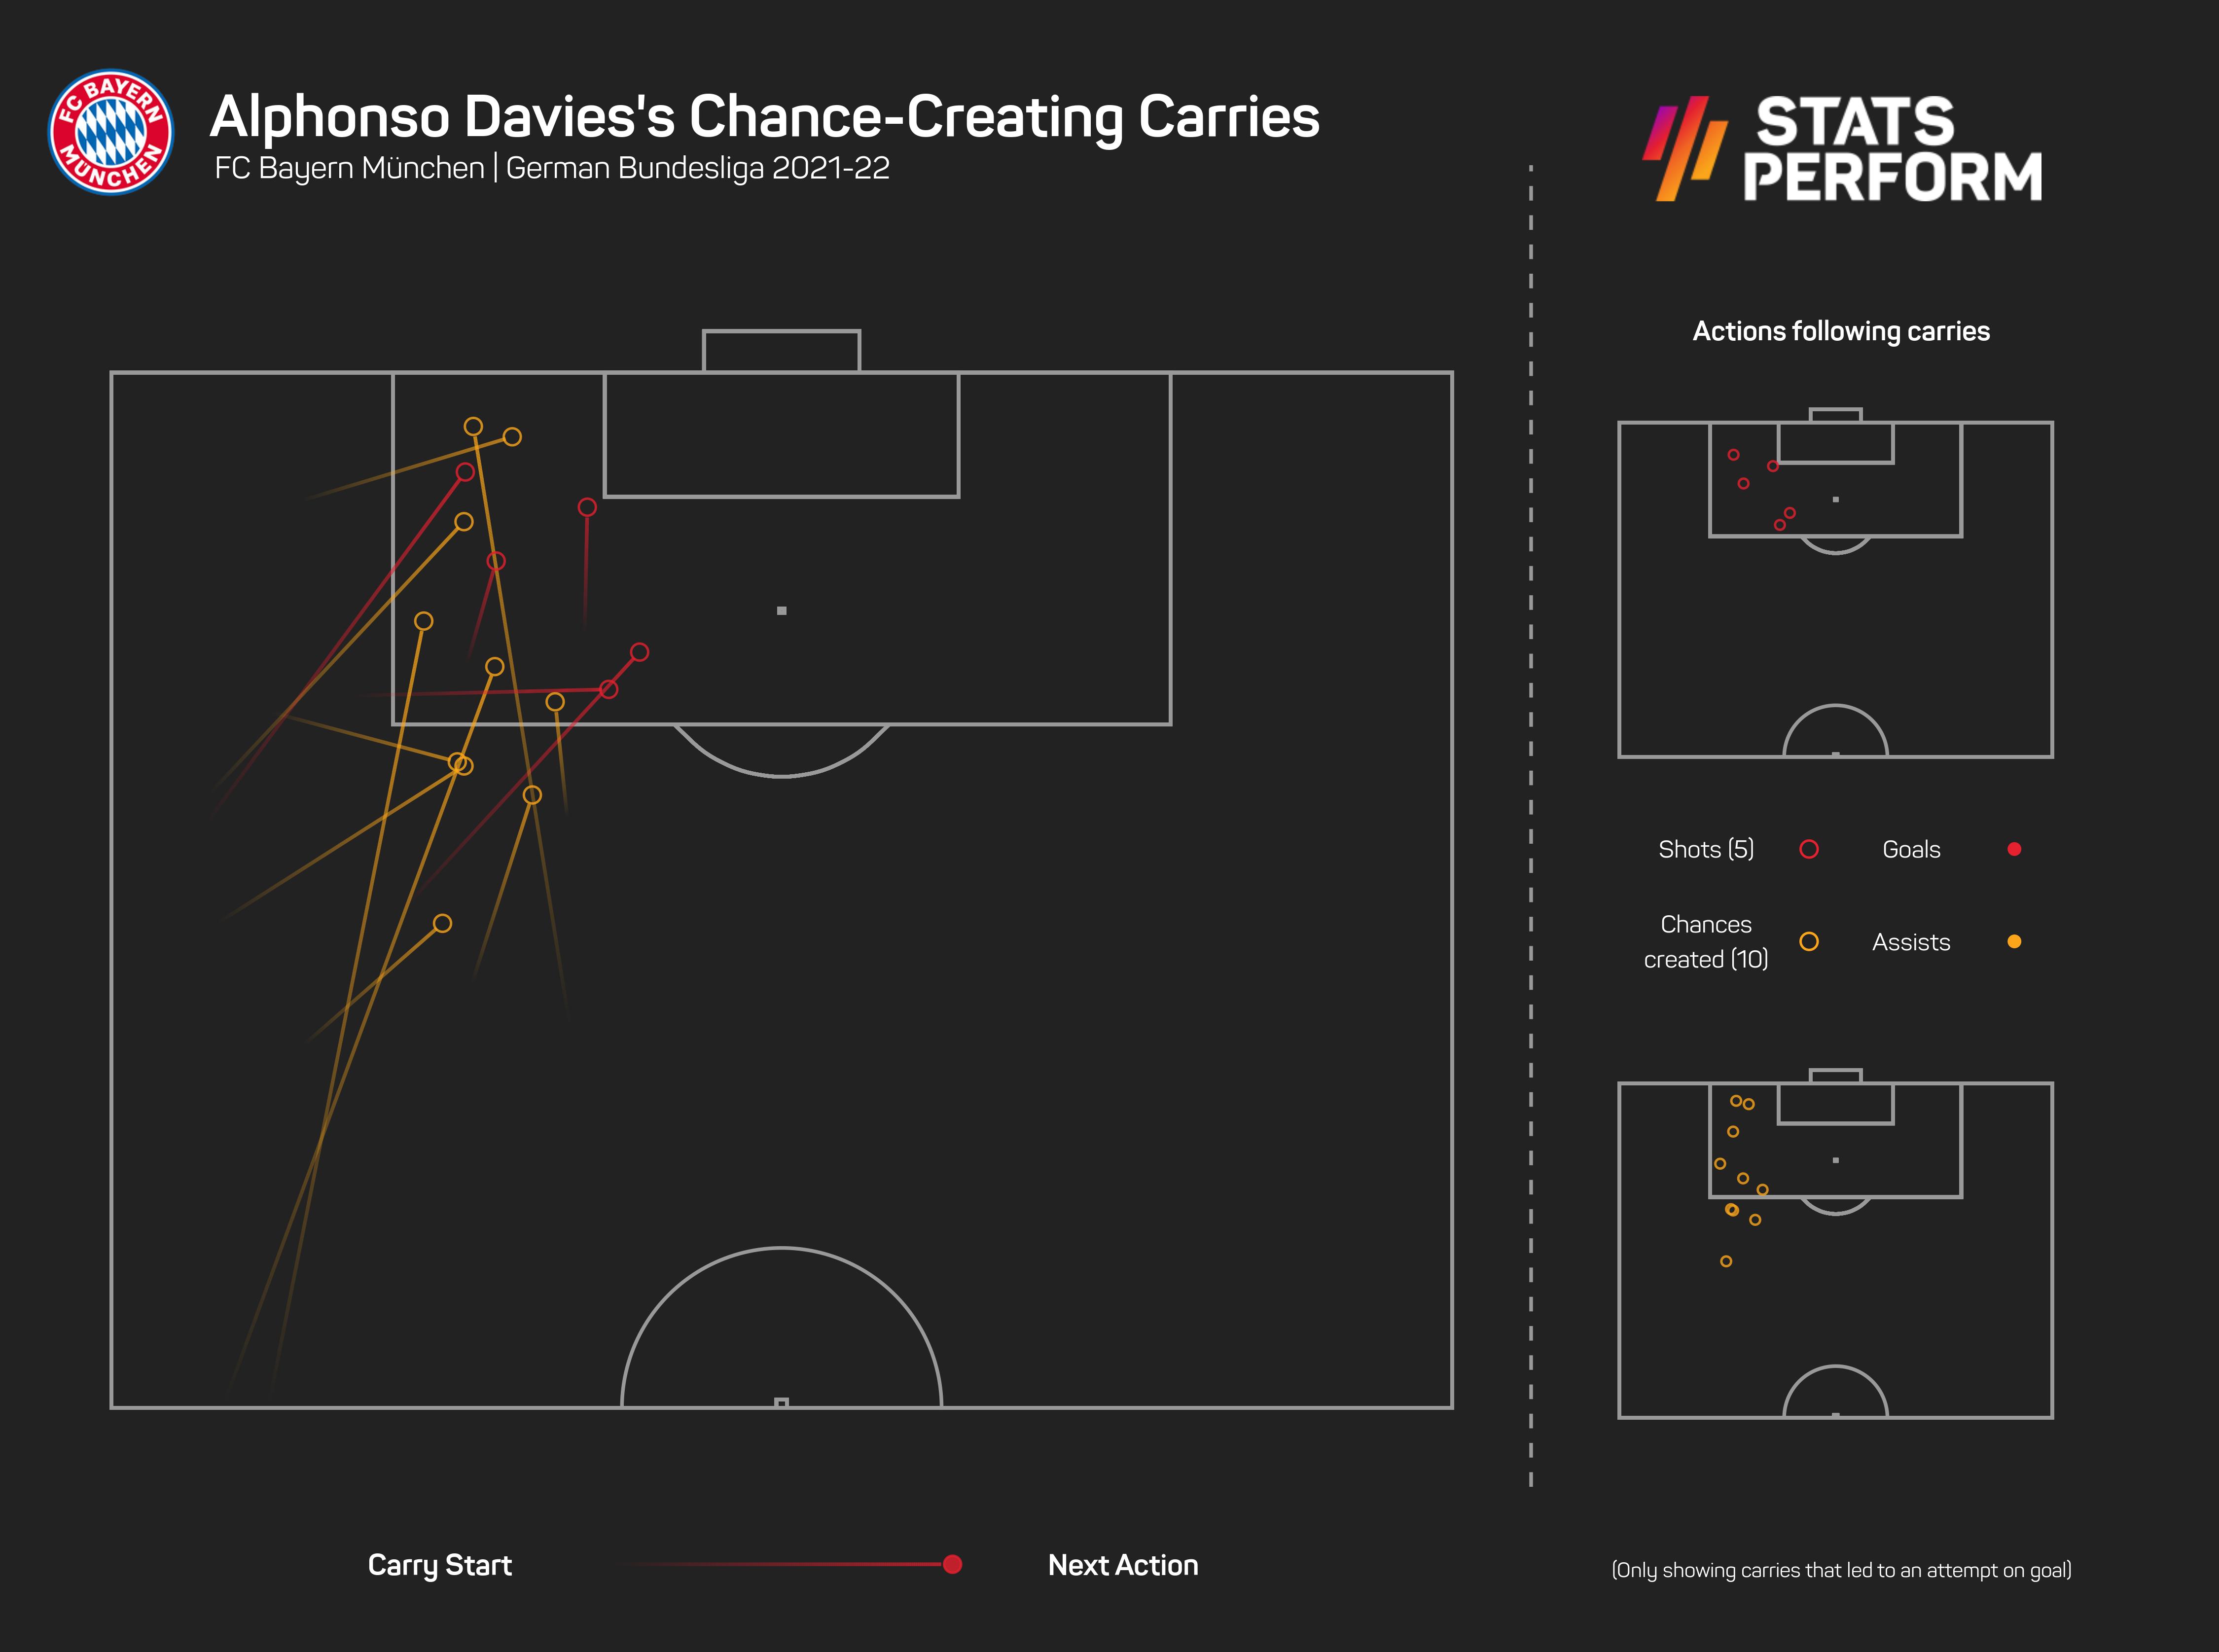 Alphonso Davies' attacking carries this season